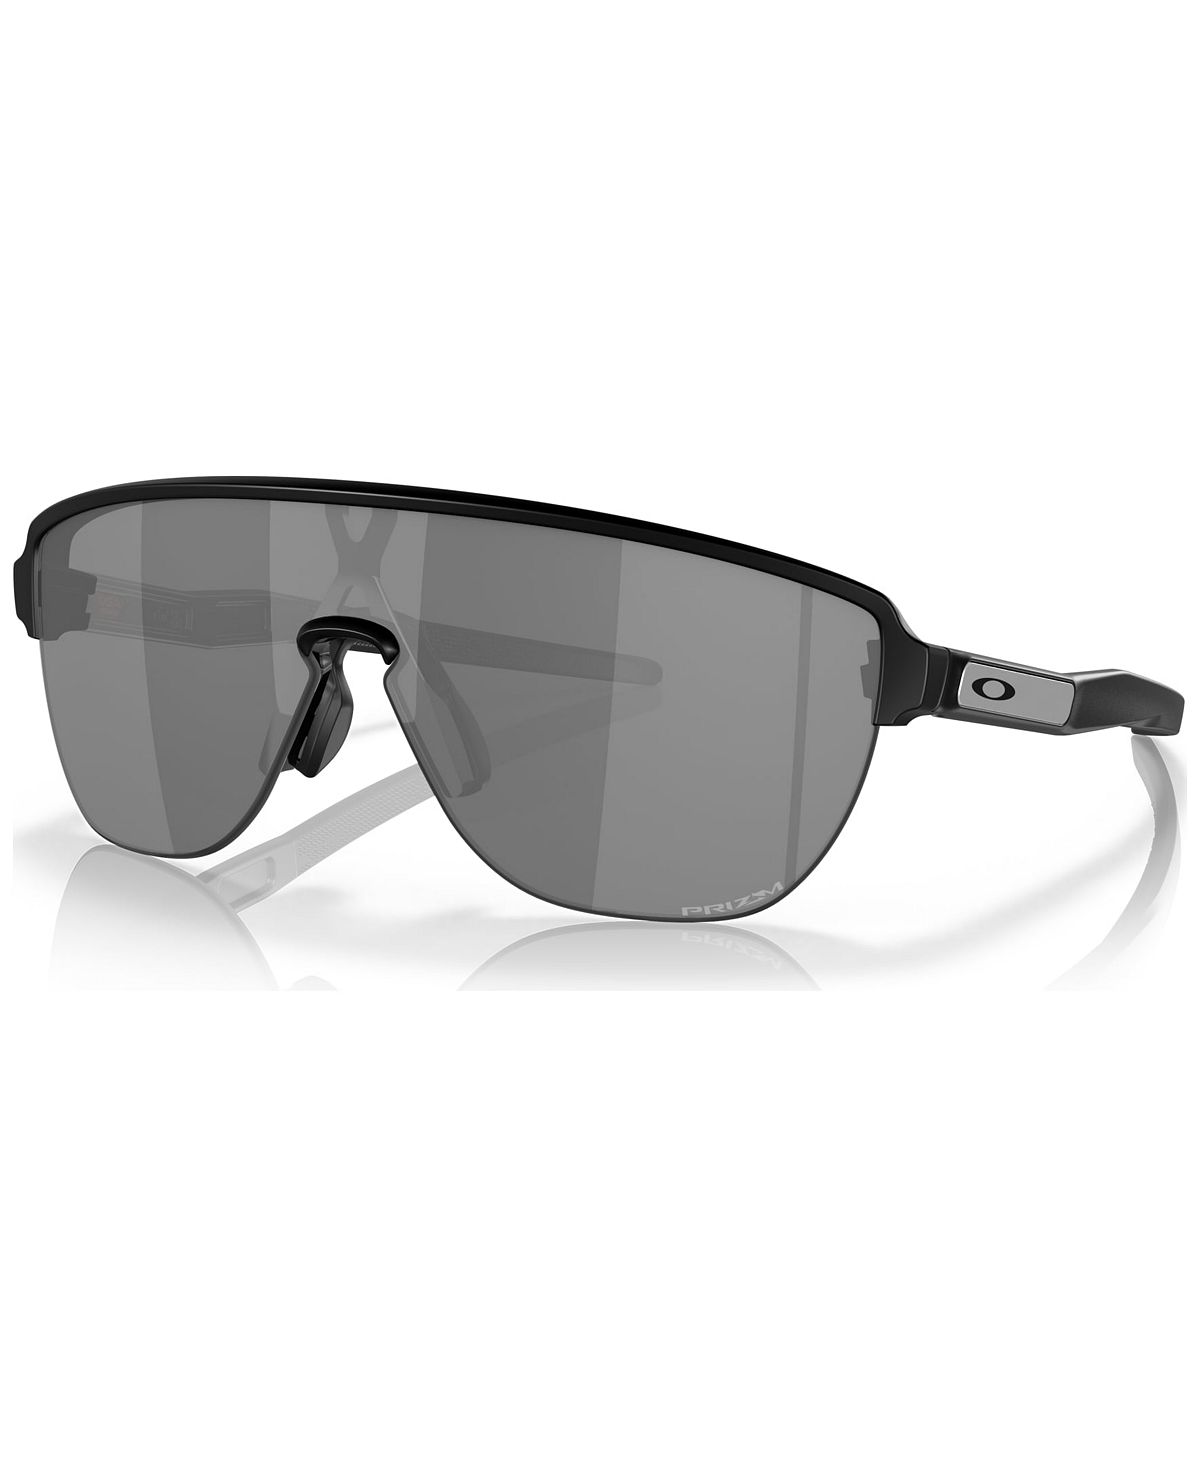 Мужские солнцезащитные очки для коридора, OO9248 Oakley t5808 matte black 80 мл c13t580800